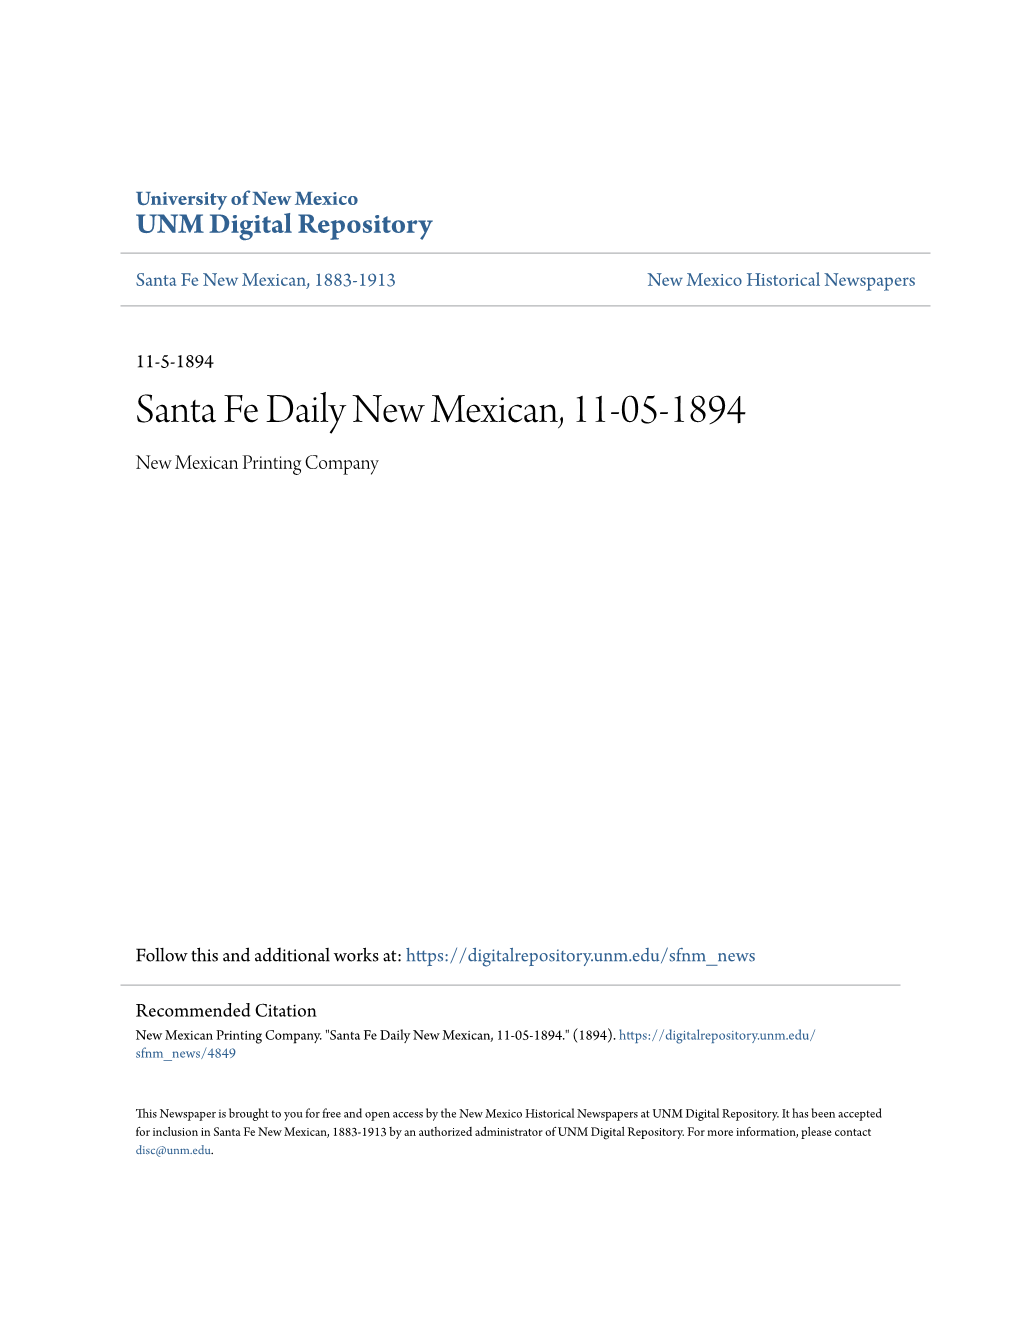 Santa Fe Daily New Mexican, 11-05-1894 New Mexican Printing Company